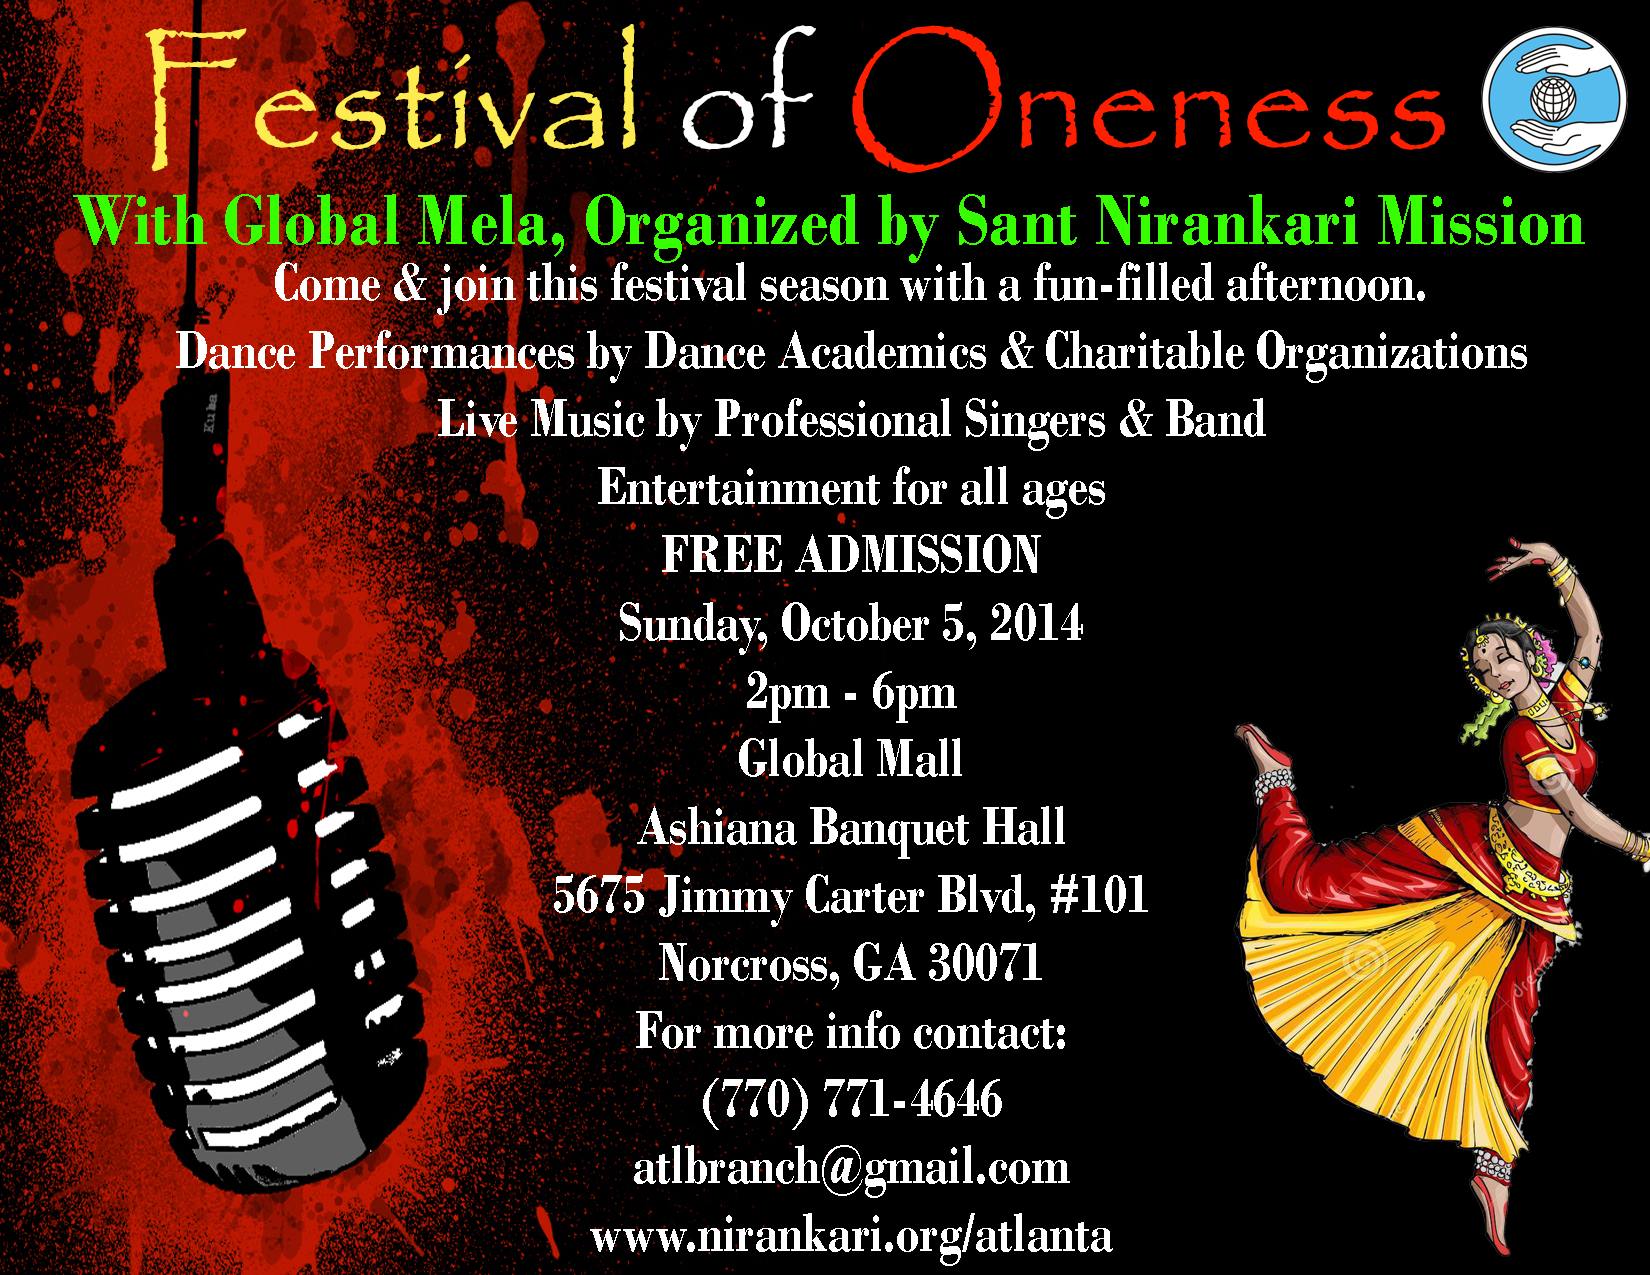 Festival of Oneness